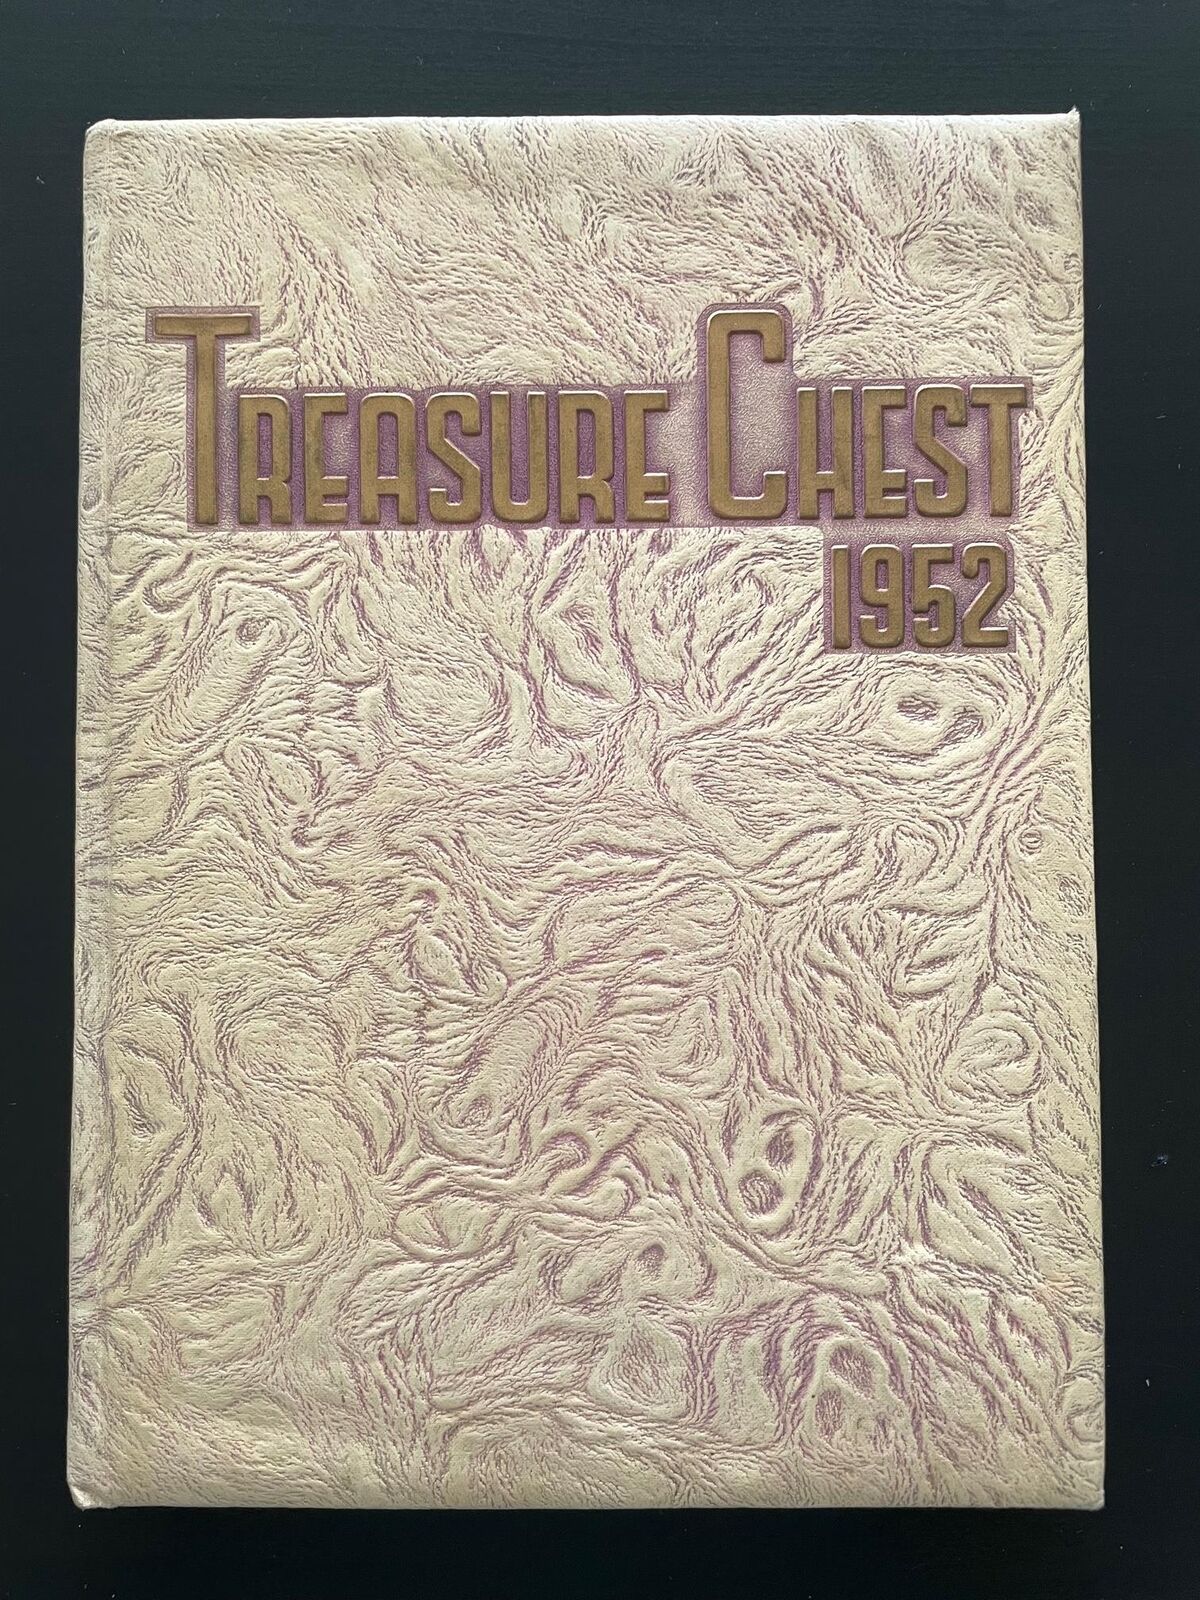 Treasure Chest 1952 John R. Rogers High School Yearbook Spokane, Washigton 